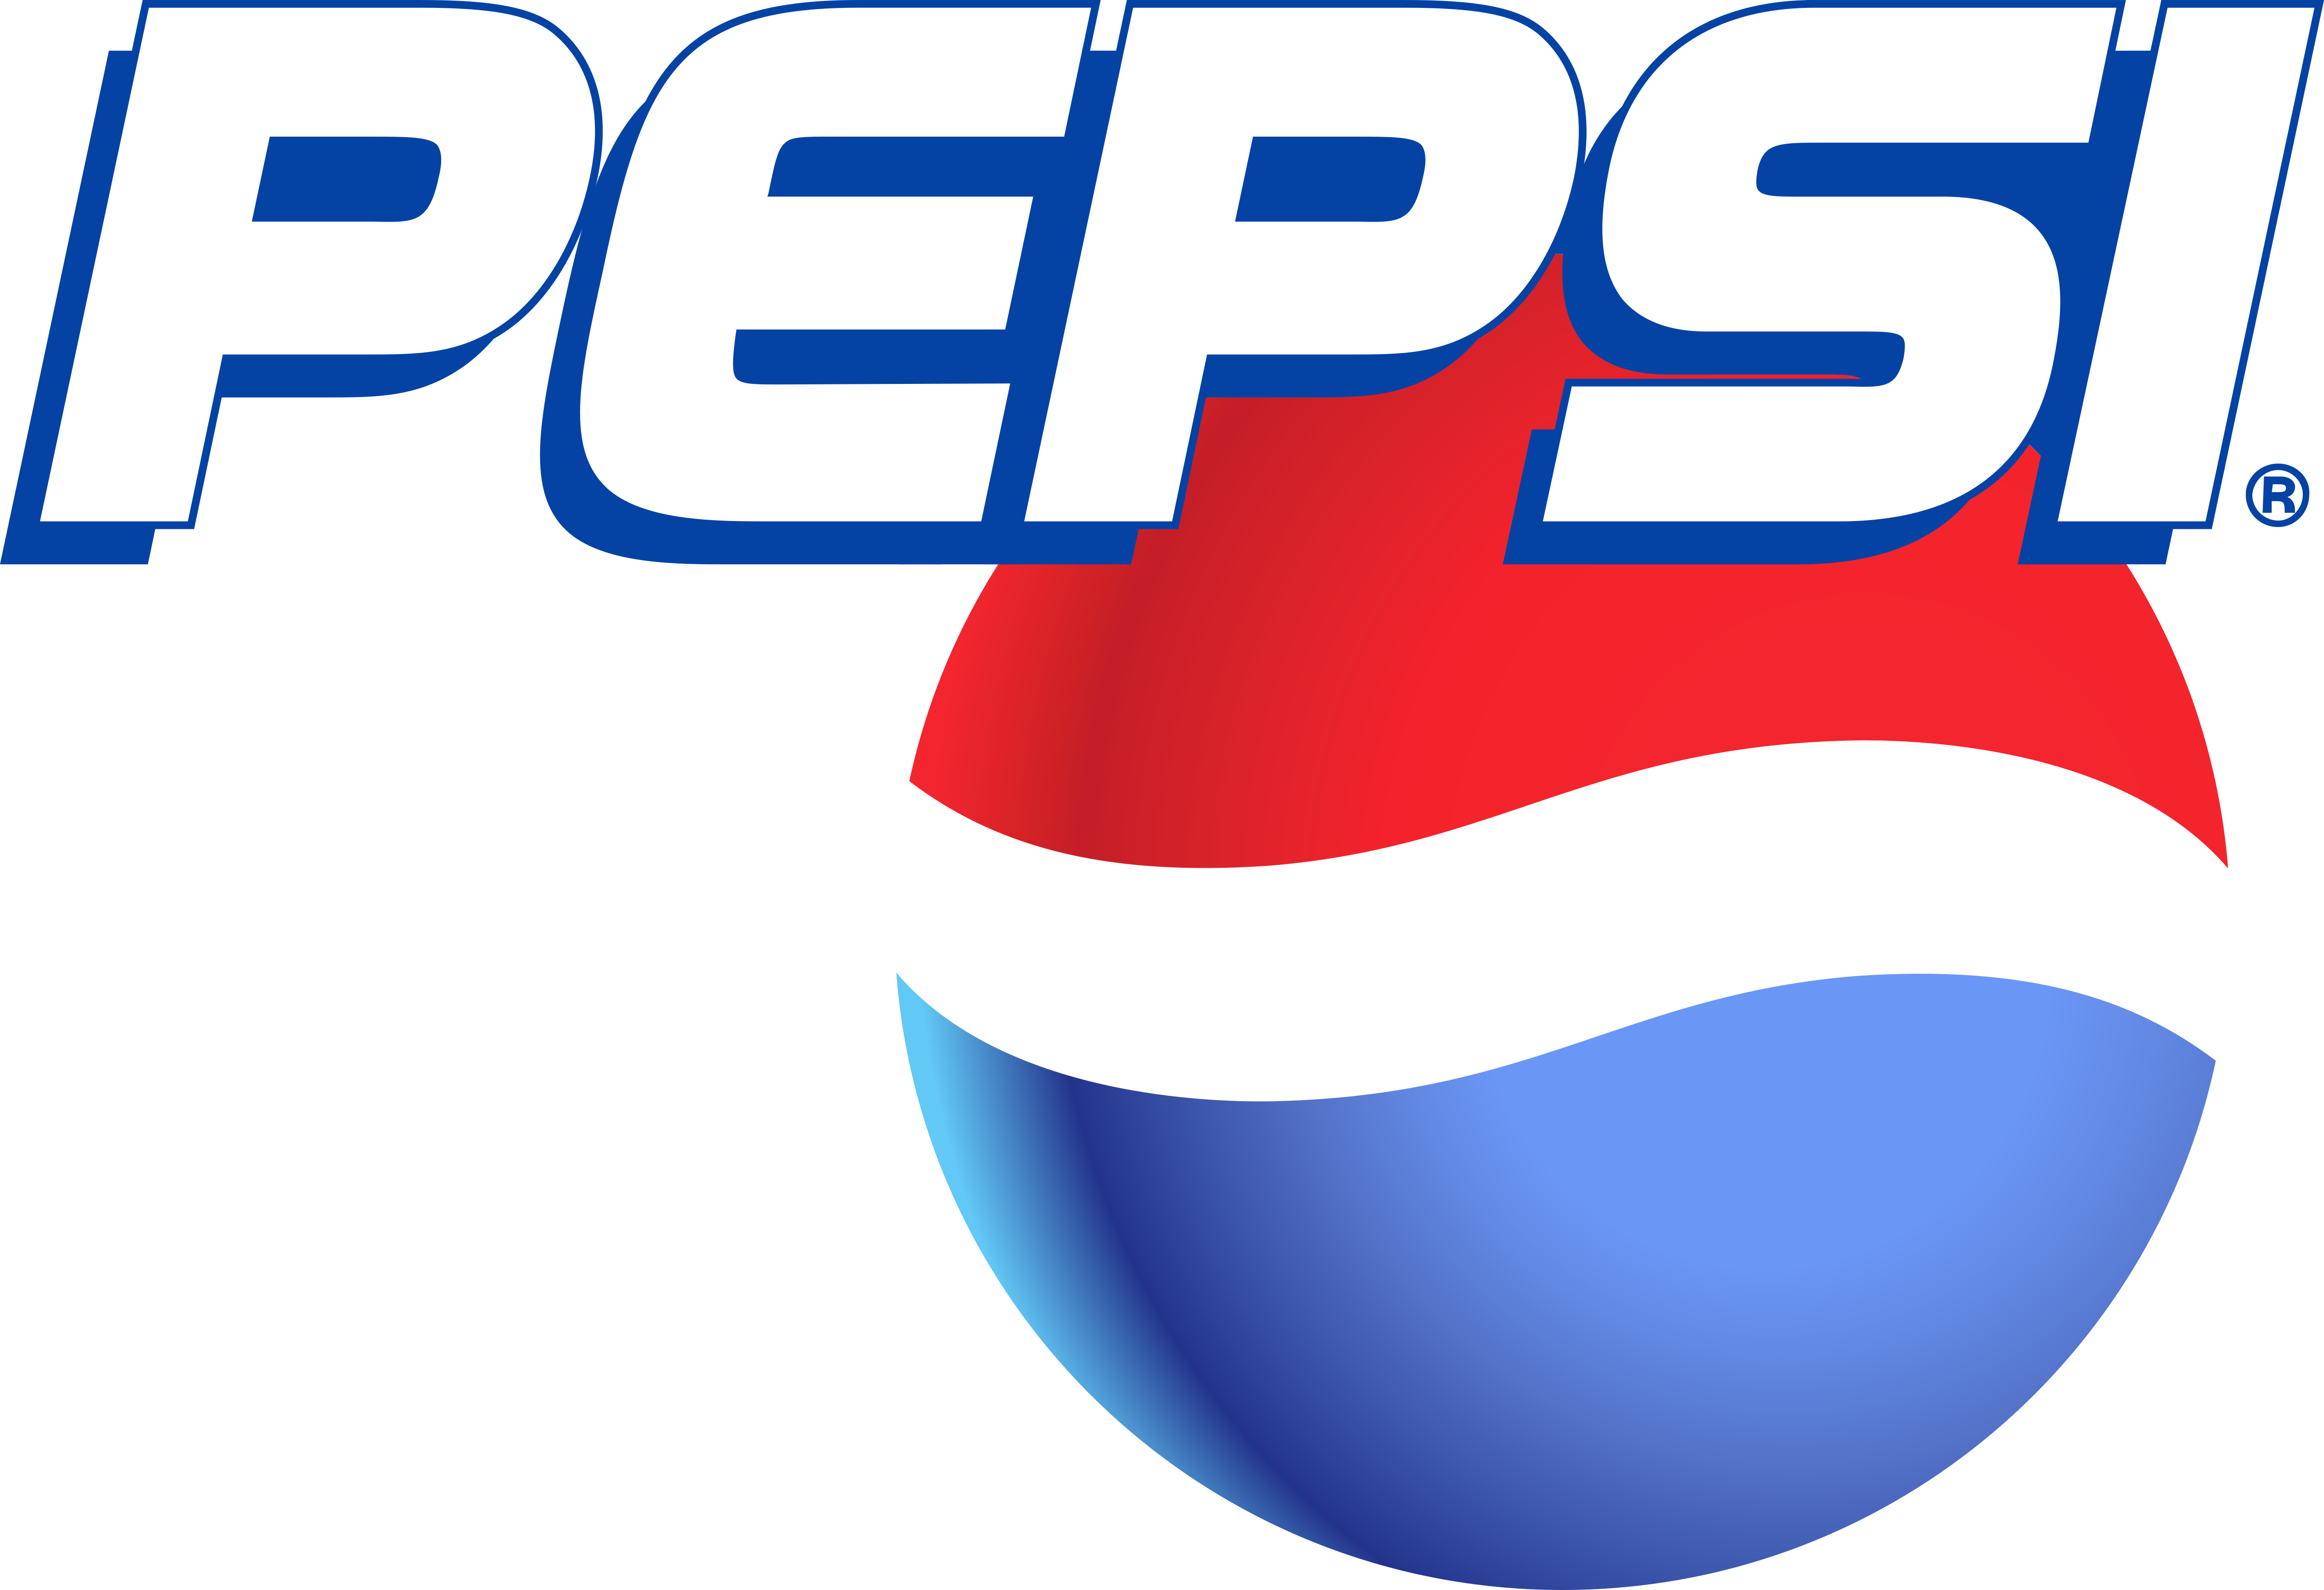 Fotos PNG antigas do logotipo da Pepsi